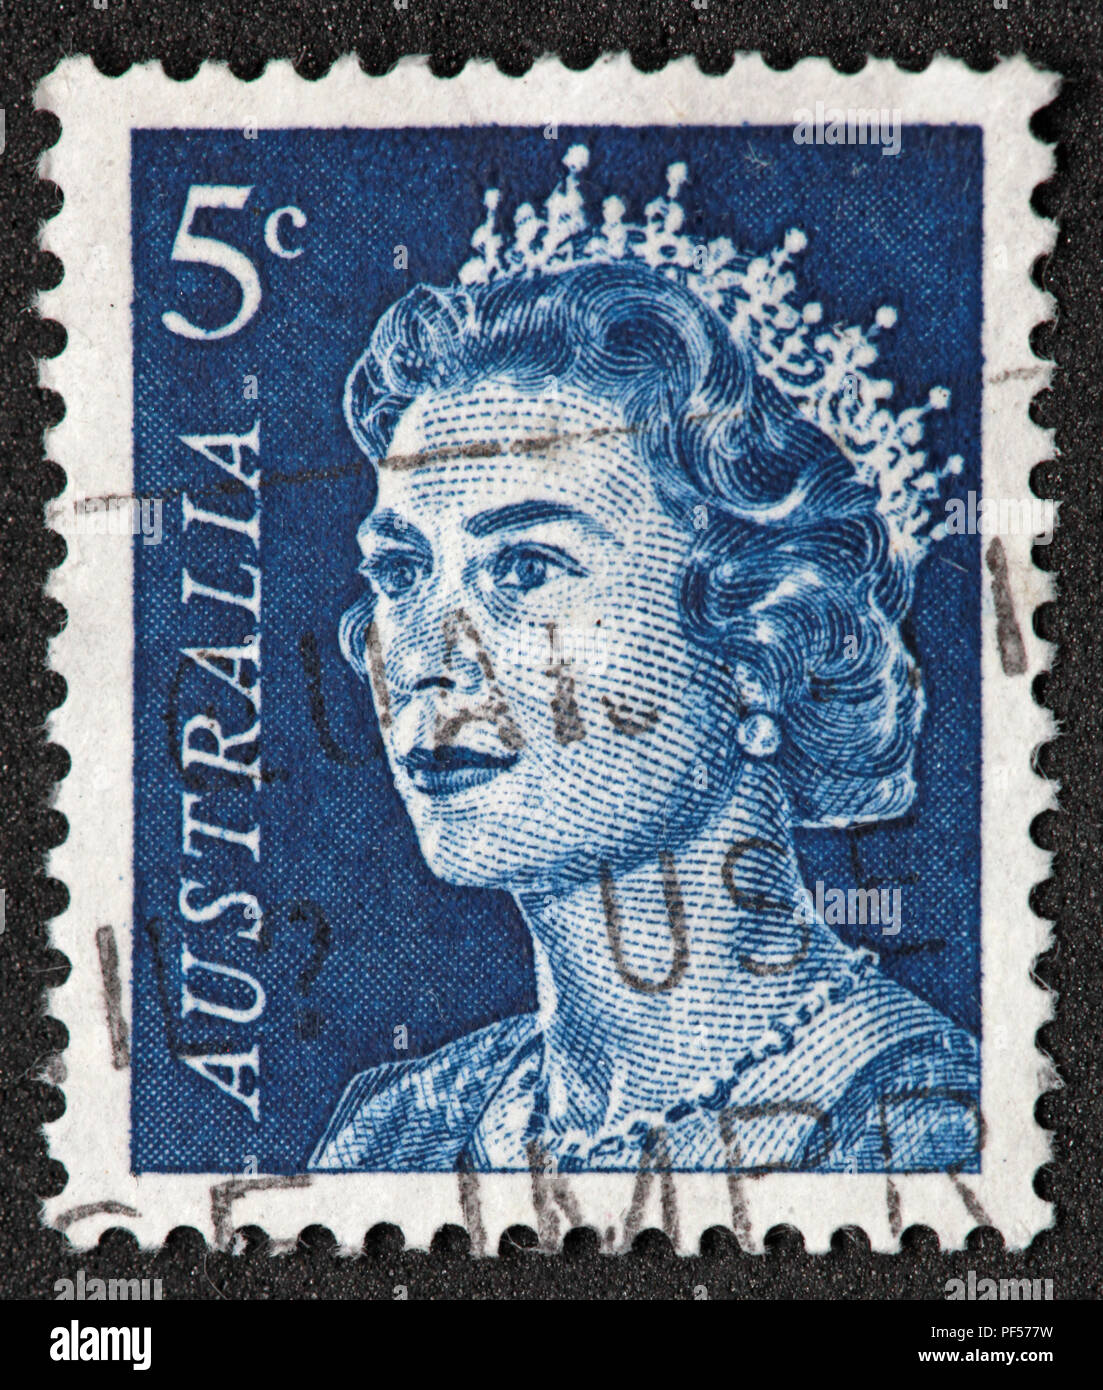 Usato Australia 5c timbro blu con la regina Elisabetta II Foto Stock